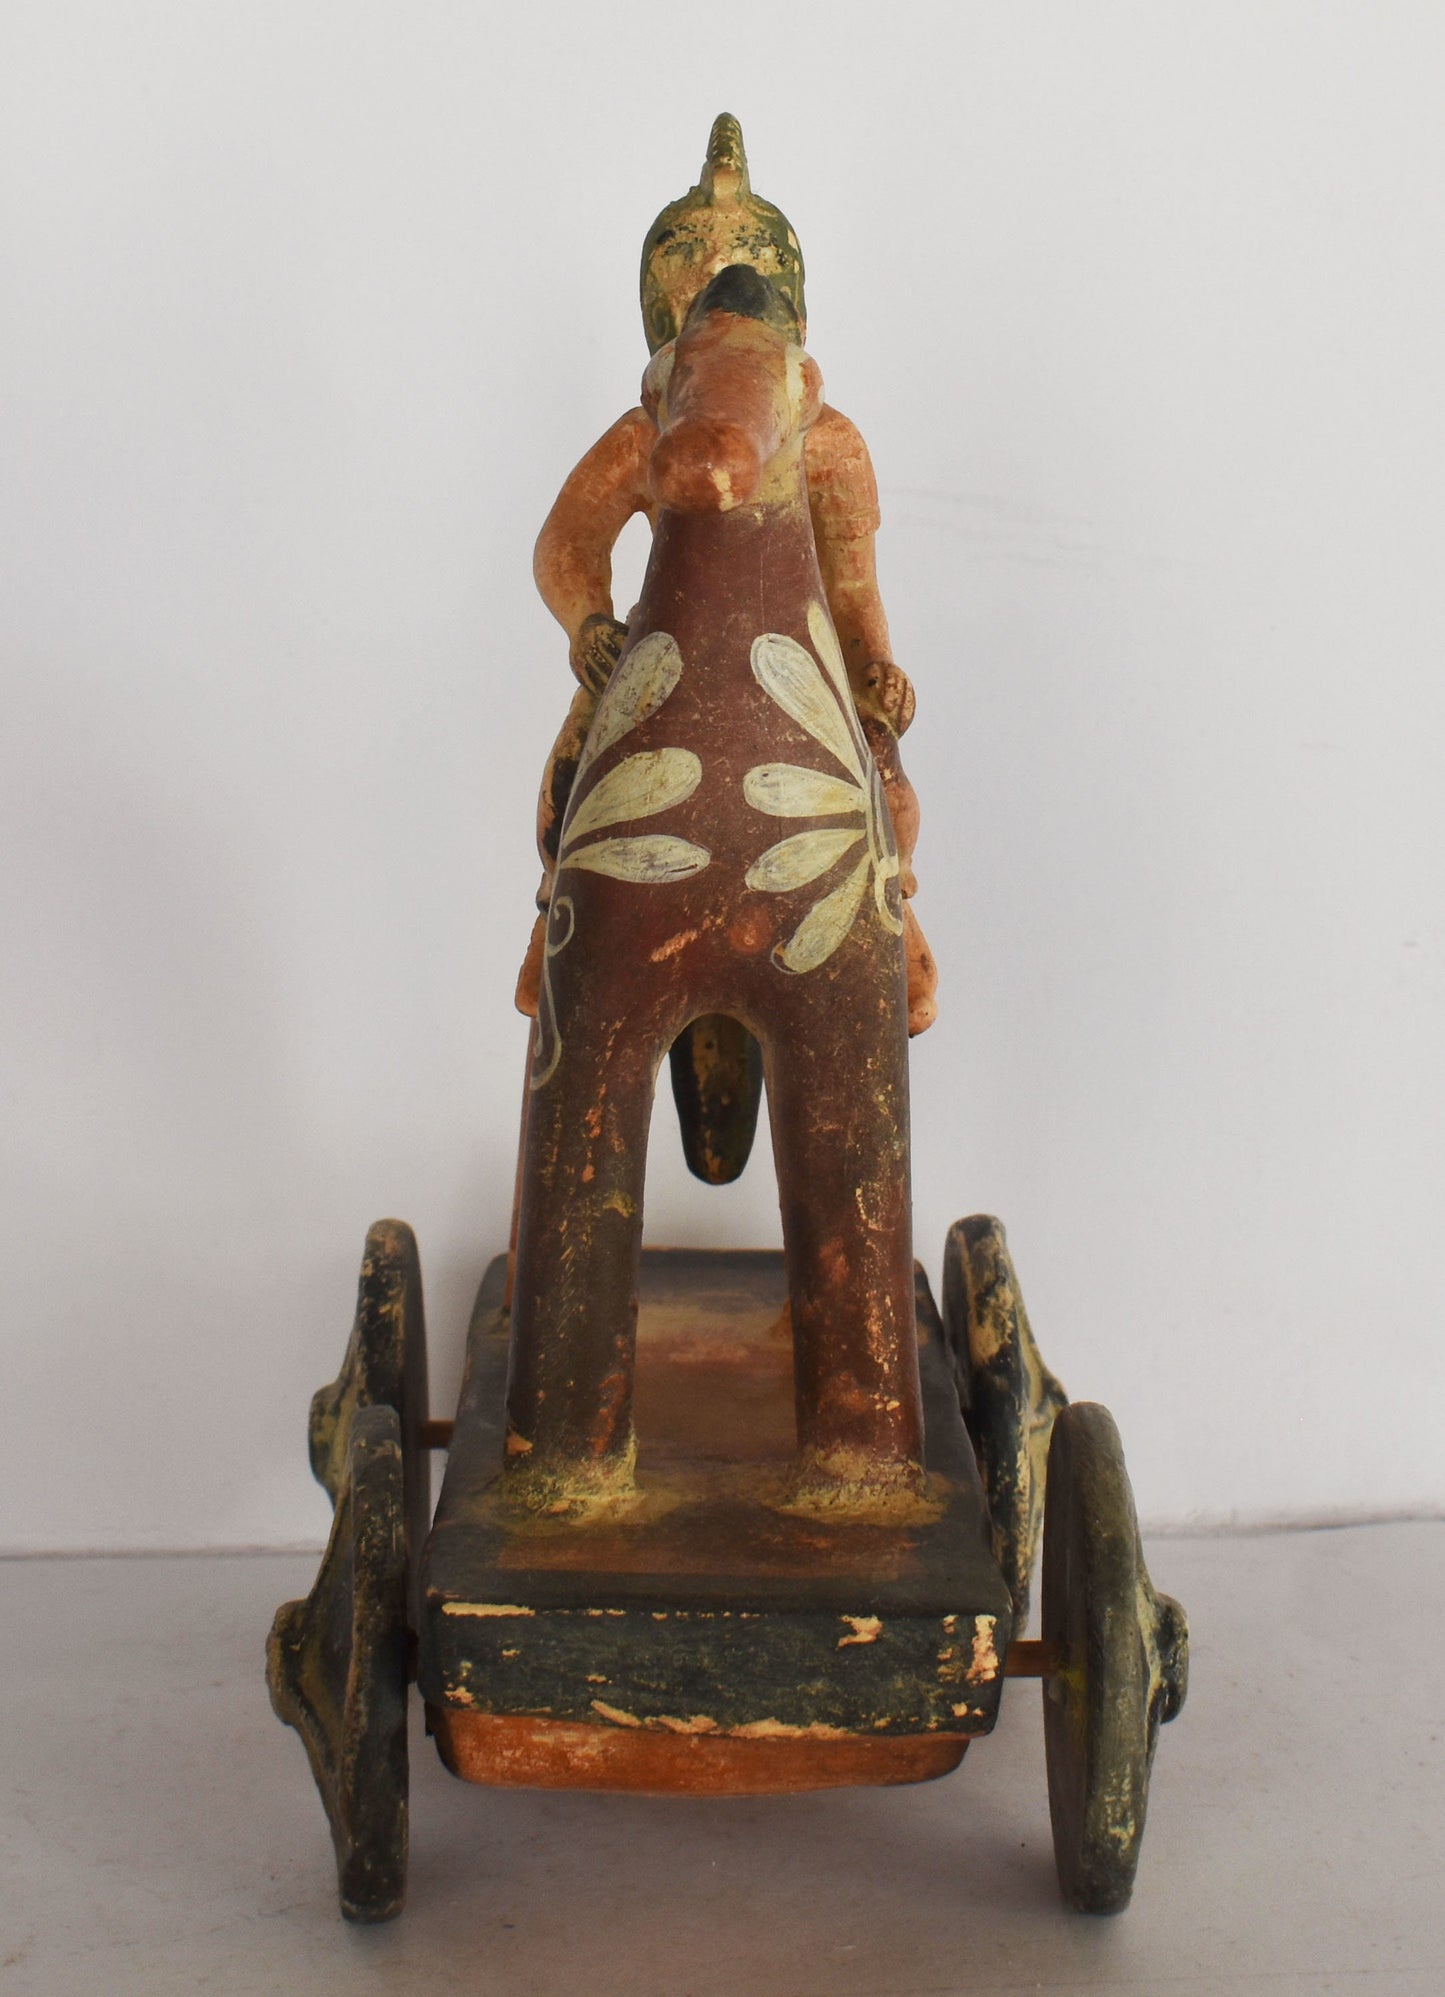 Horse Rider - Wheels Toy - Athens, Attica - 500 BC - Miniature - Museum Reproduction  - Ceramic Artifact